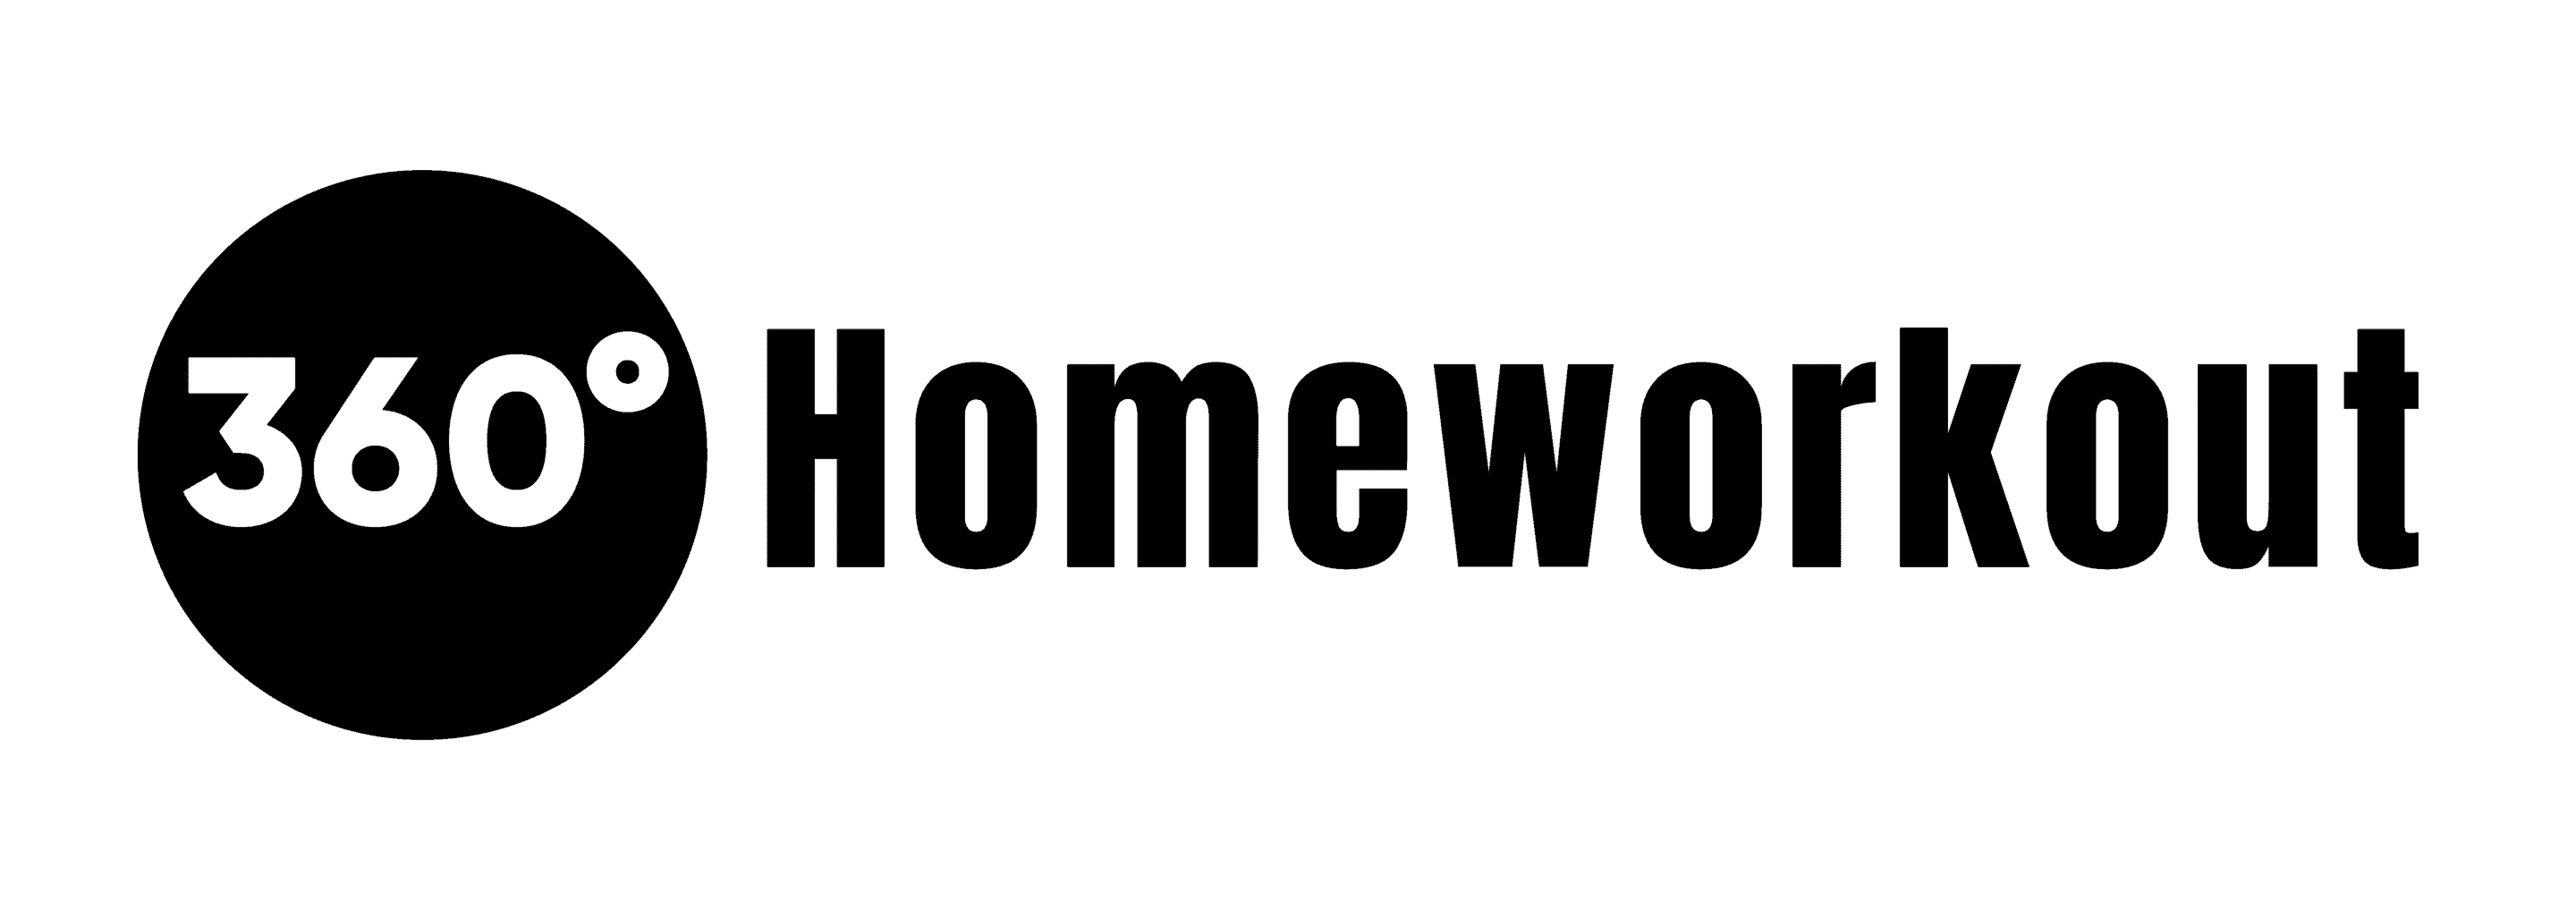 360 Grad-Homeworkout